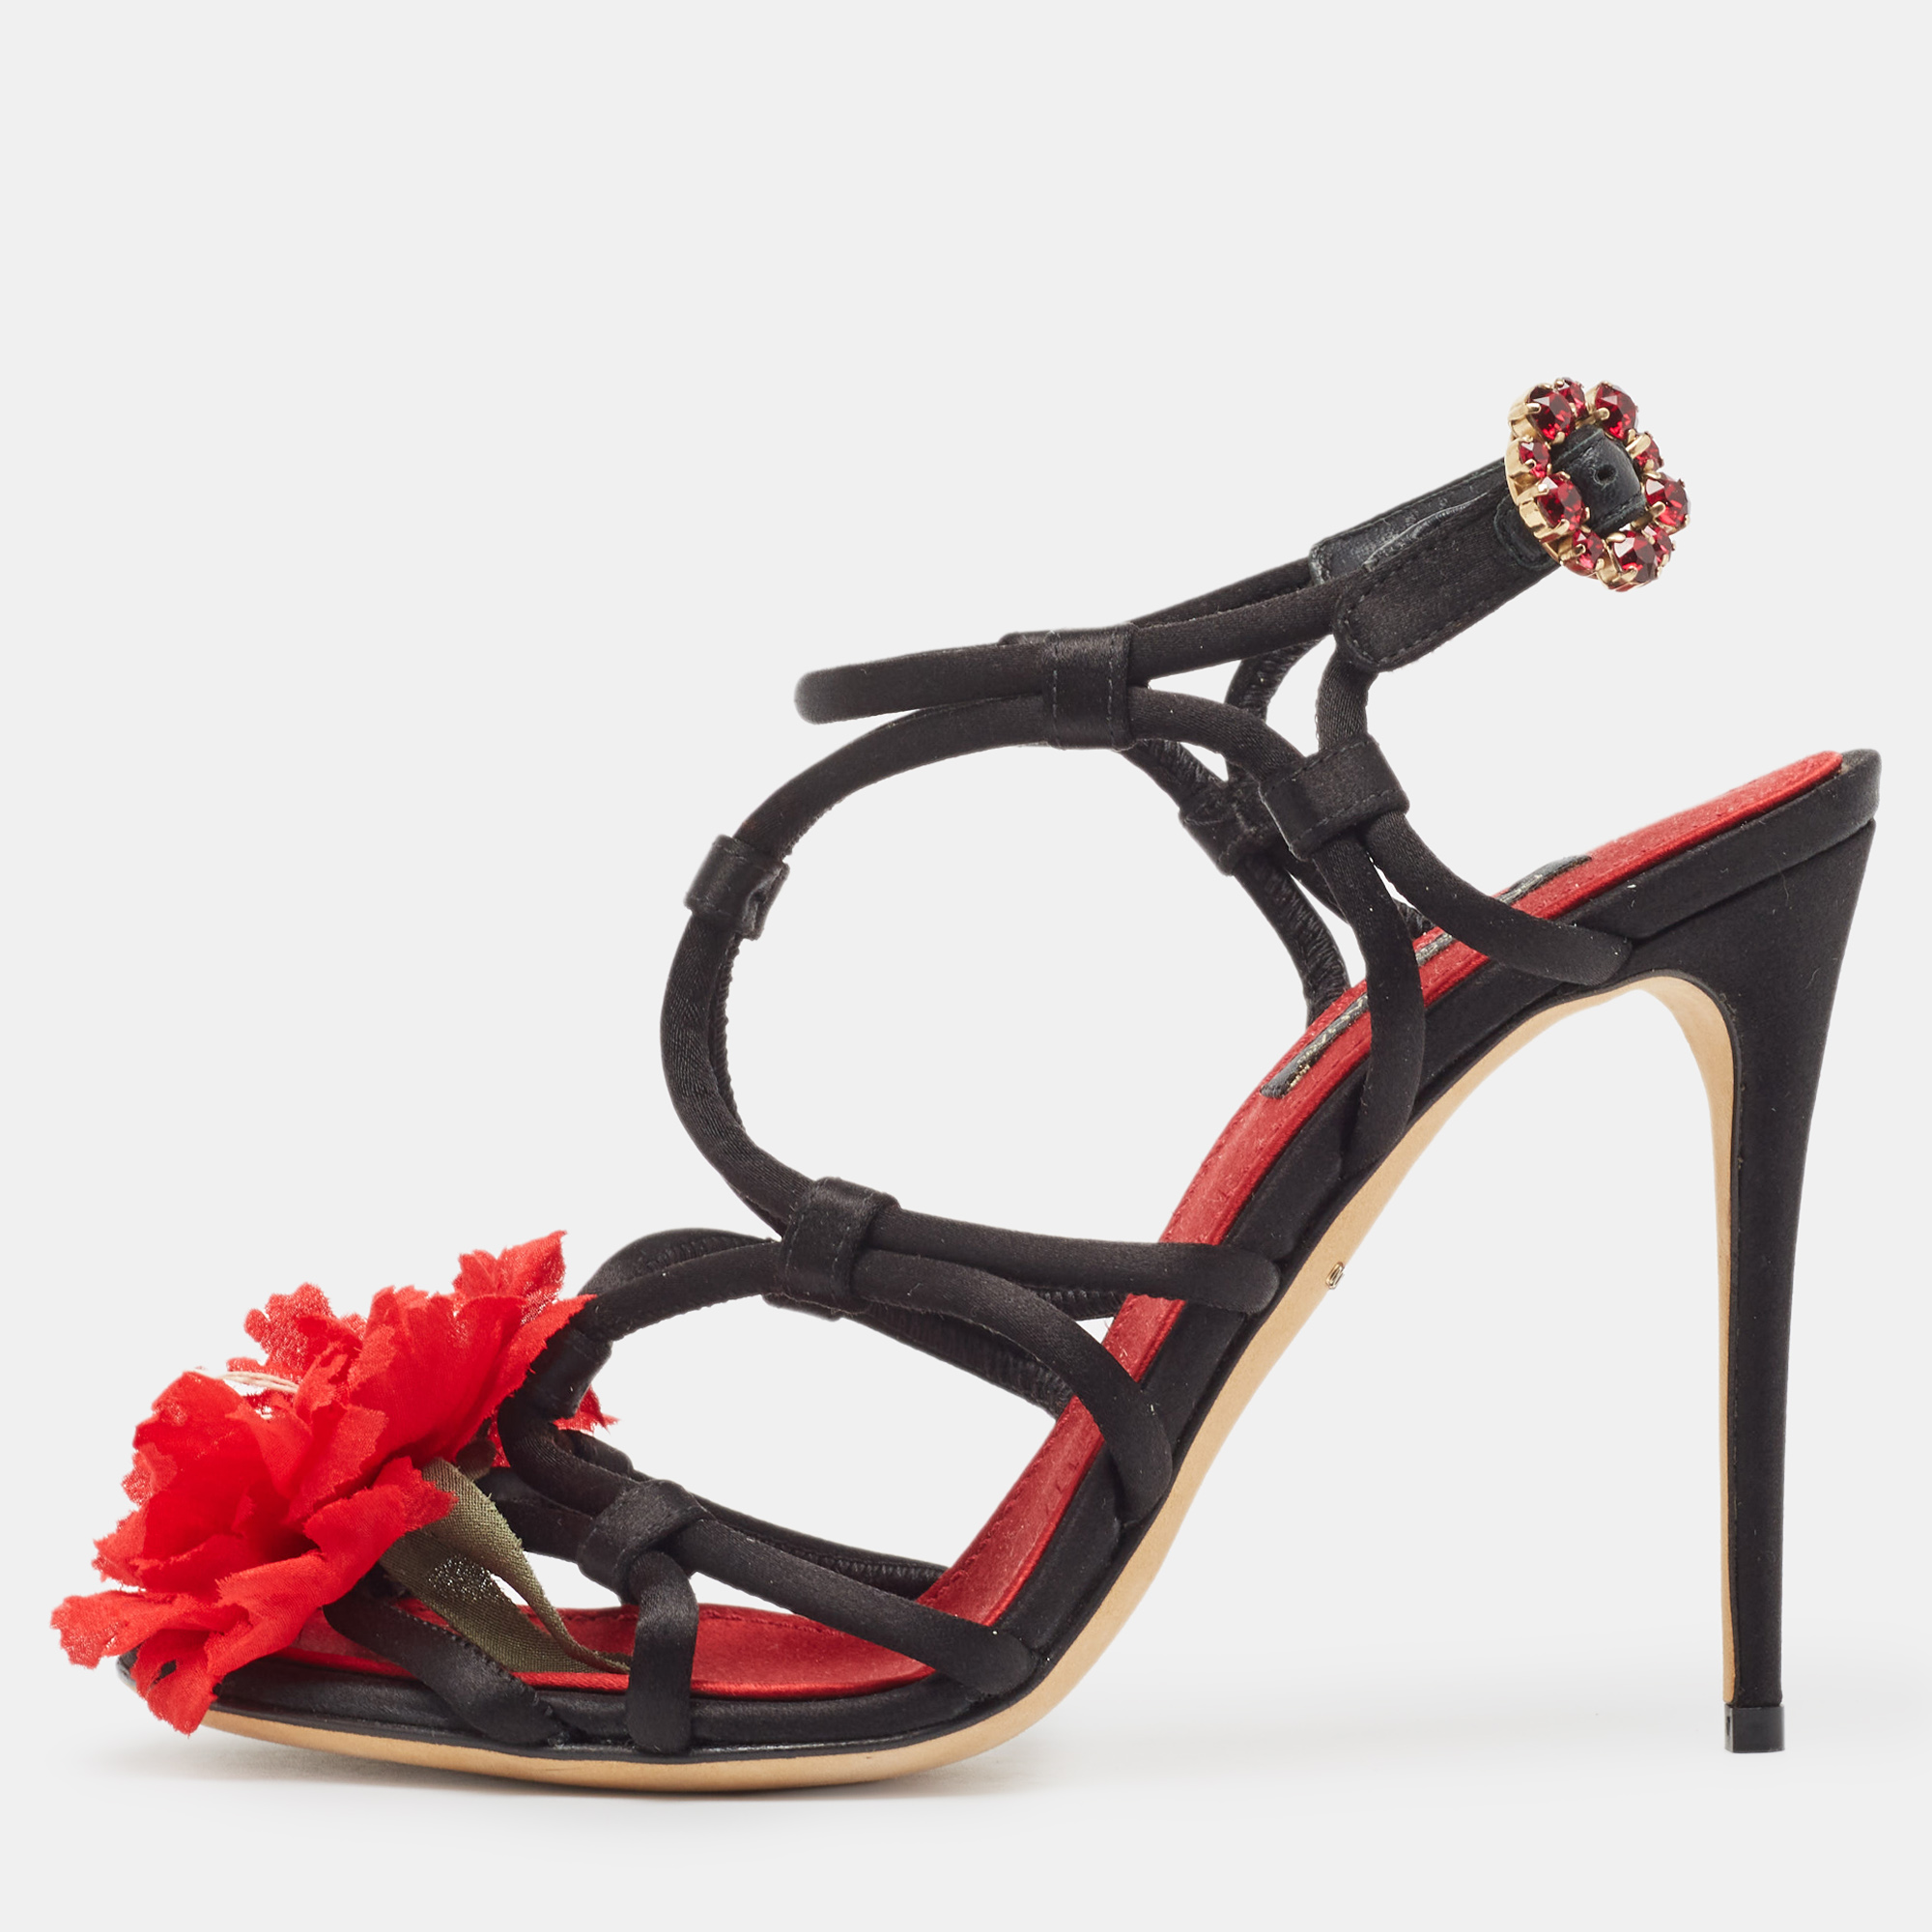 Dolce & gabbana black/red satin ankle strap sandals size 36